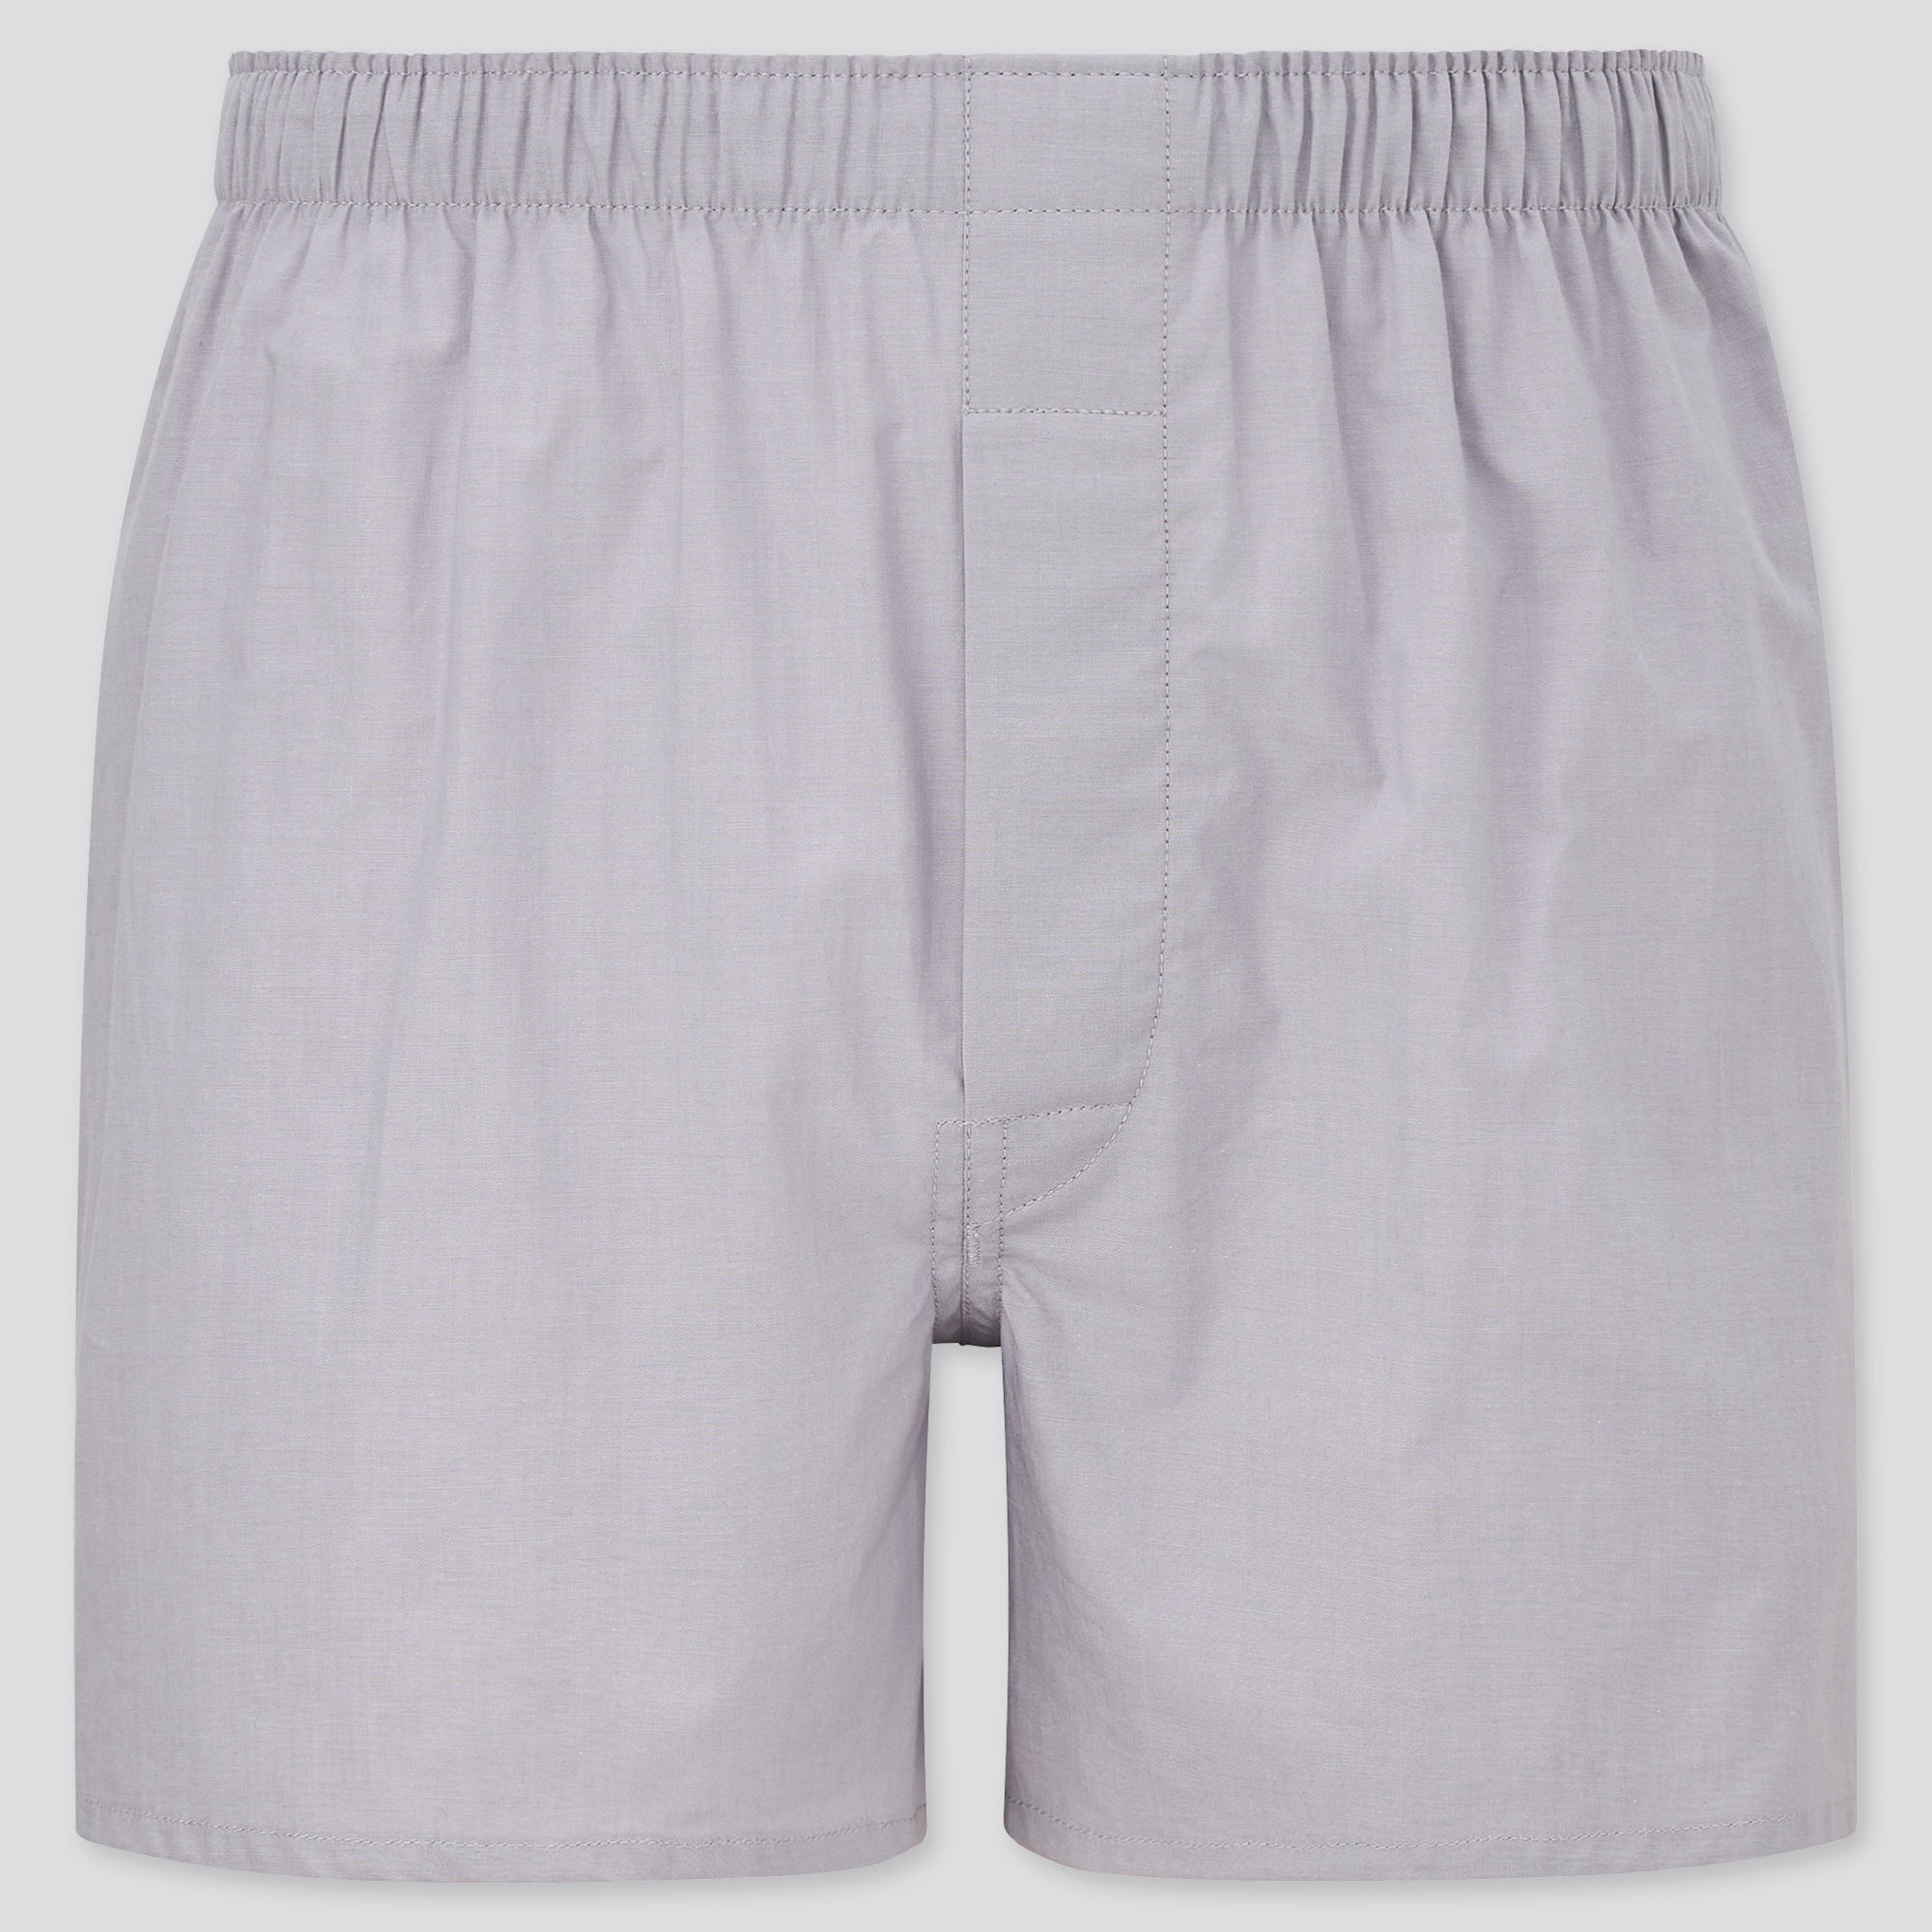 Boxers Mens Woven Check Print Poly Cotton Boxer Shorts Underwear Plain Trunks 